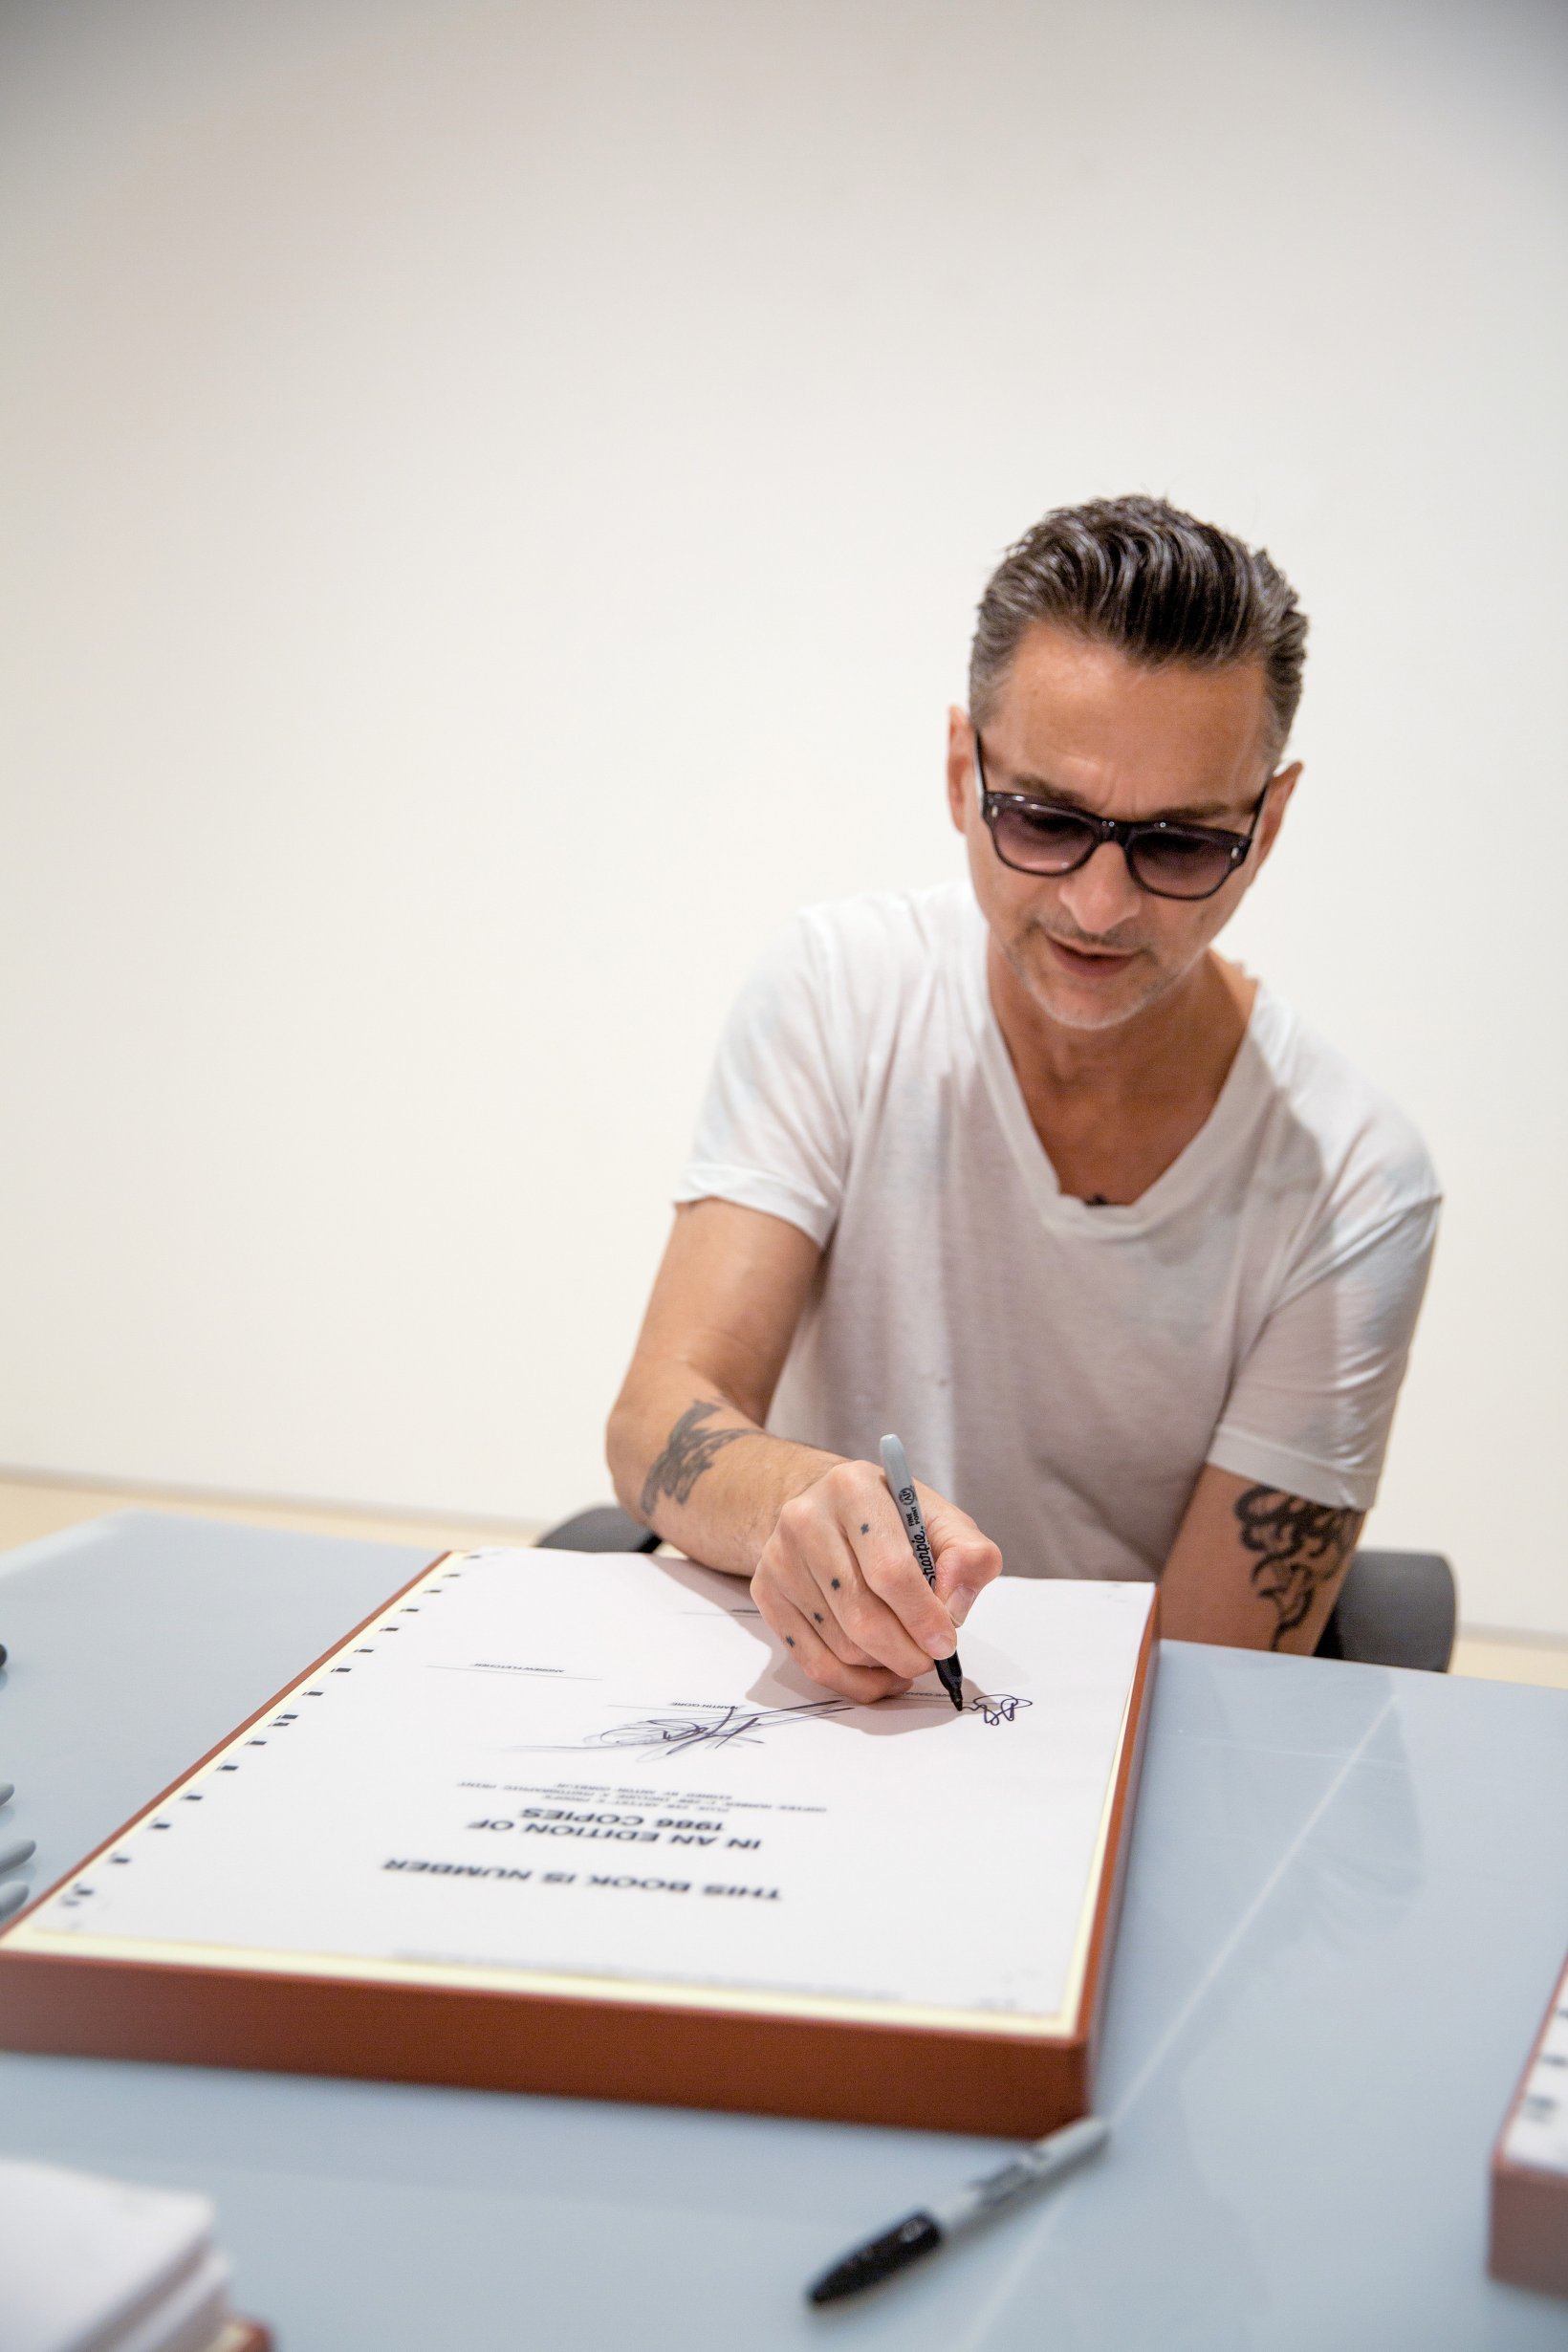 Kniha Depeche Mode by Anton Corbijn